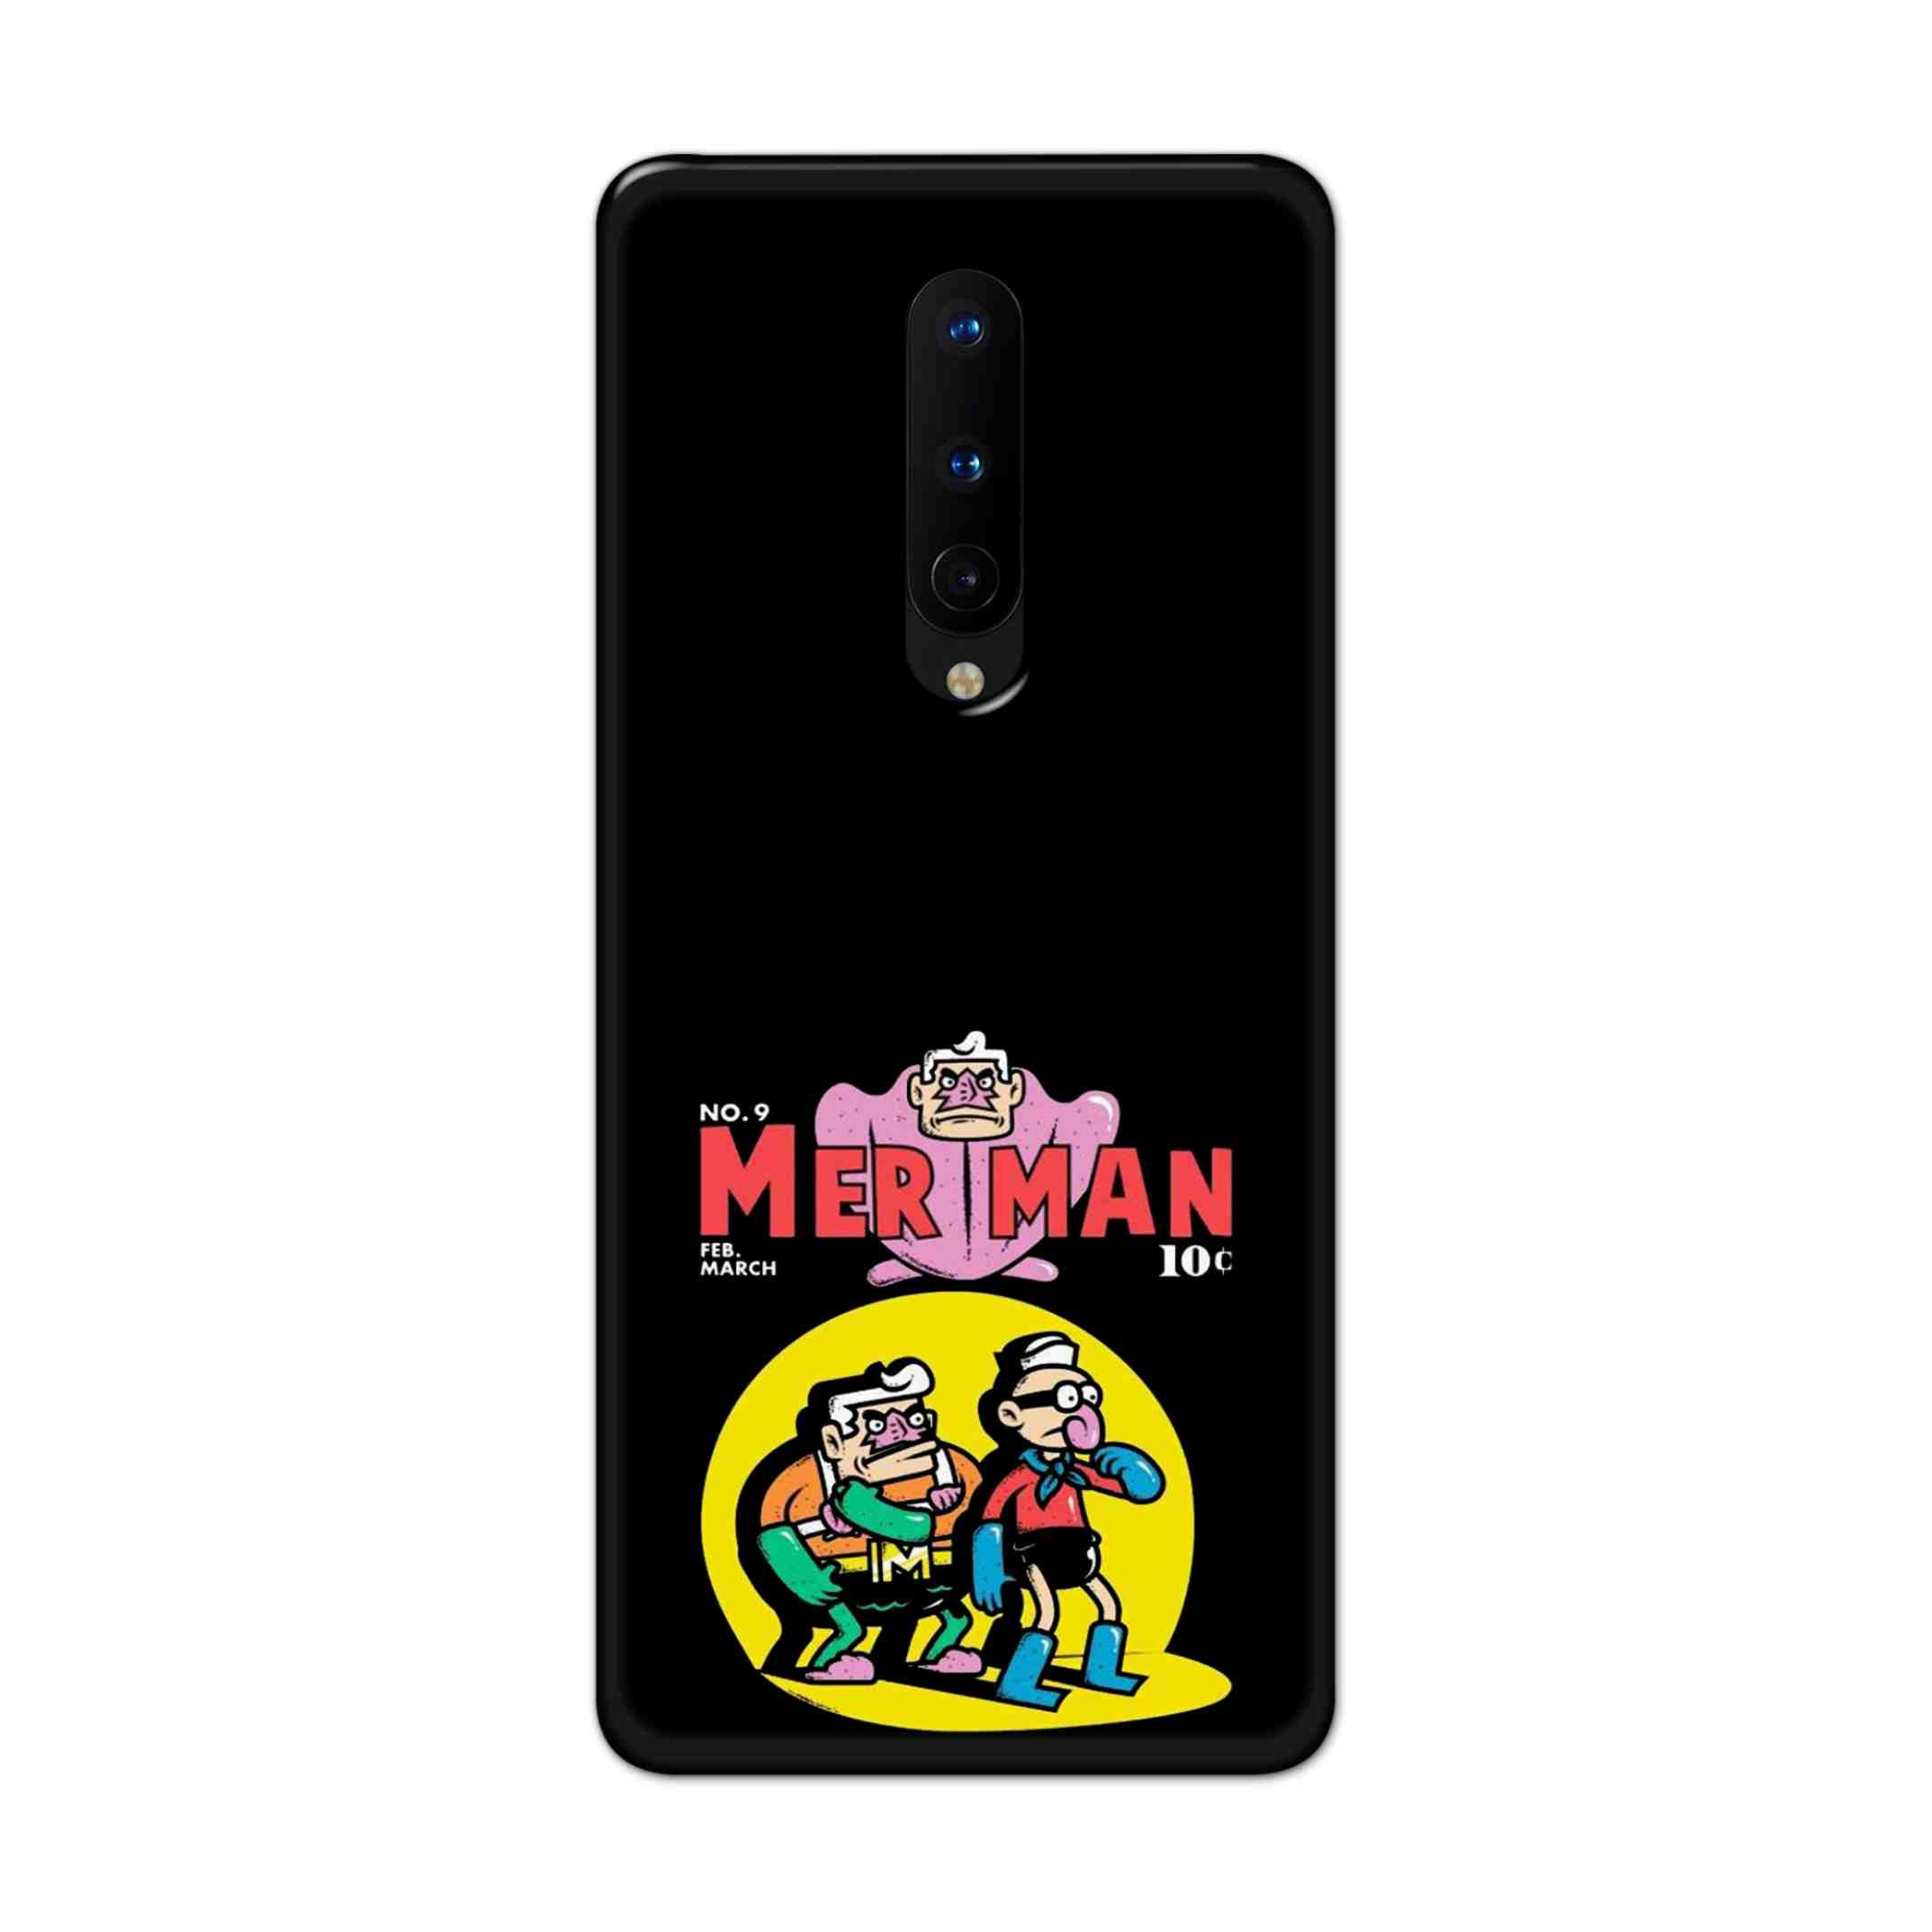 Buy Merman Hard Back Mobile Phone Case Cover For OnePlus 8 Online